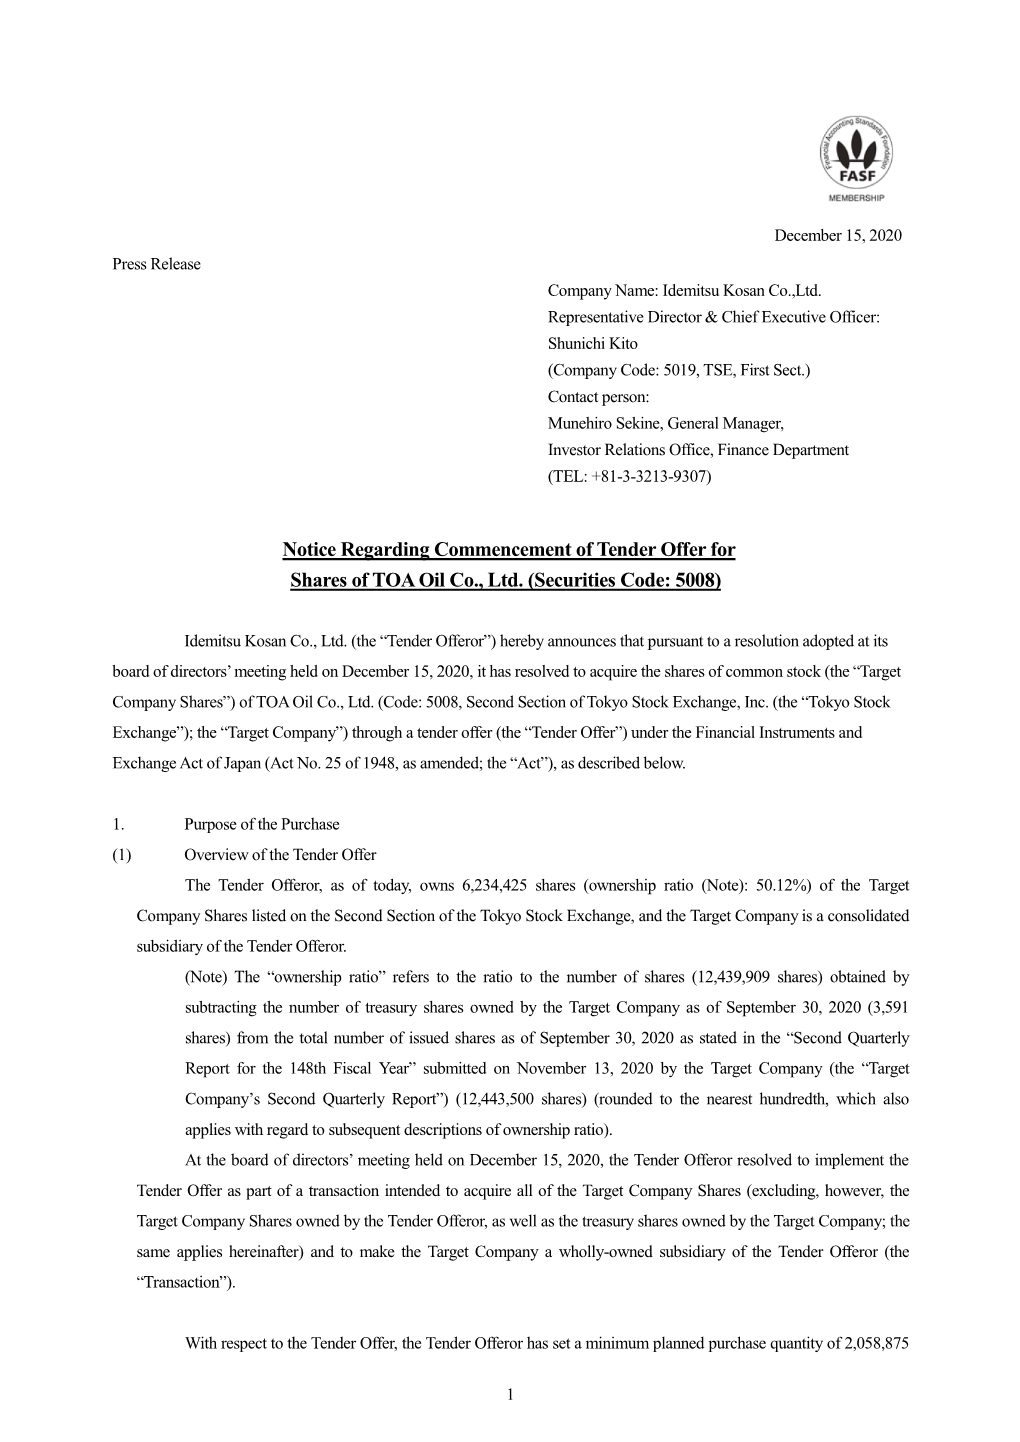 Notice Regarding Commencement of Tender Offer for Shares of TOA Oil Co., Ltd